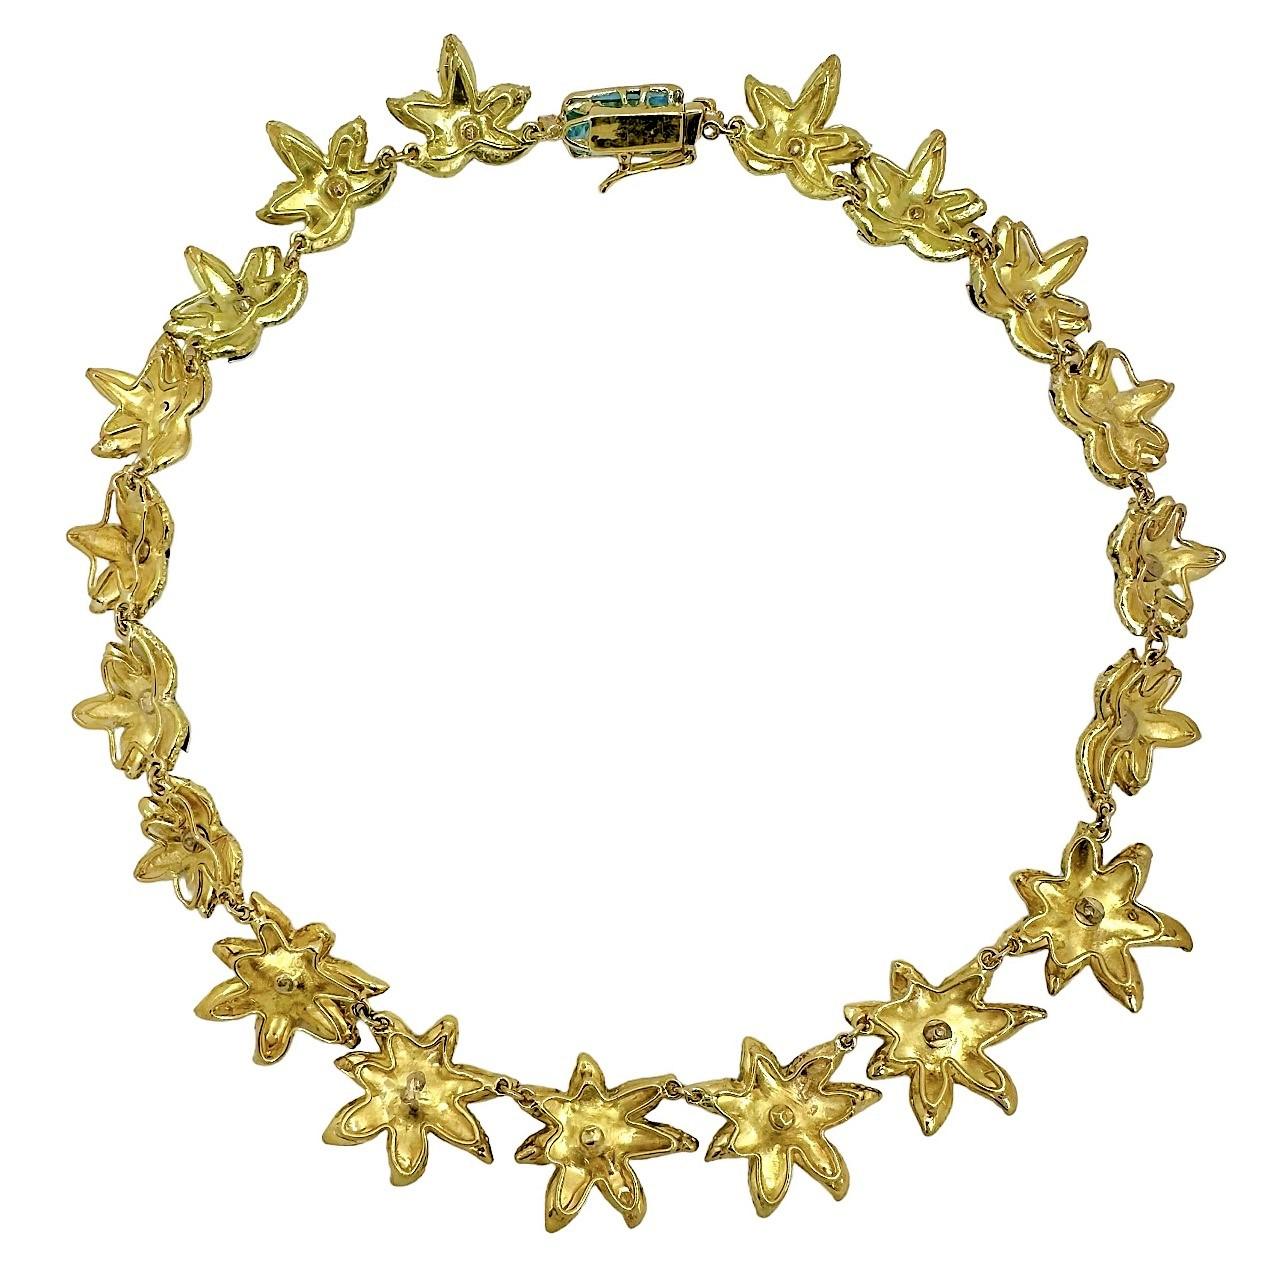 Brilliant Cut Vintage 18k Yellow Gold Floral Motif Necklace with Diamonds